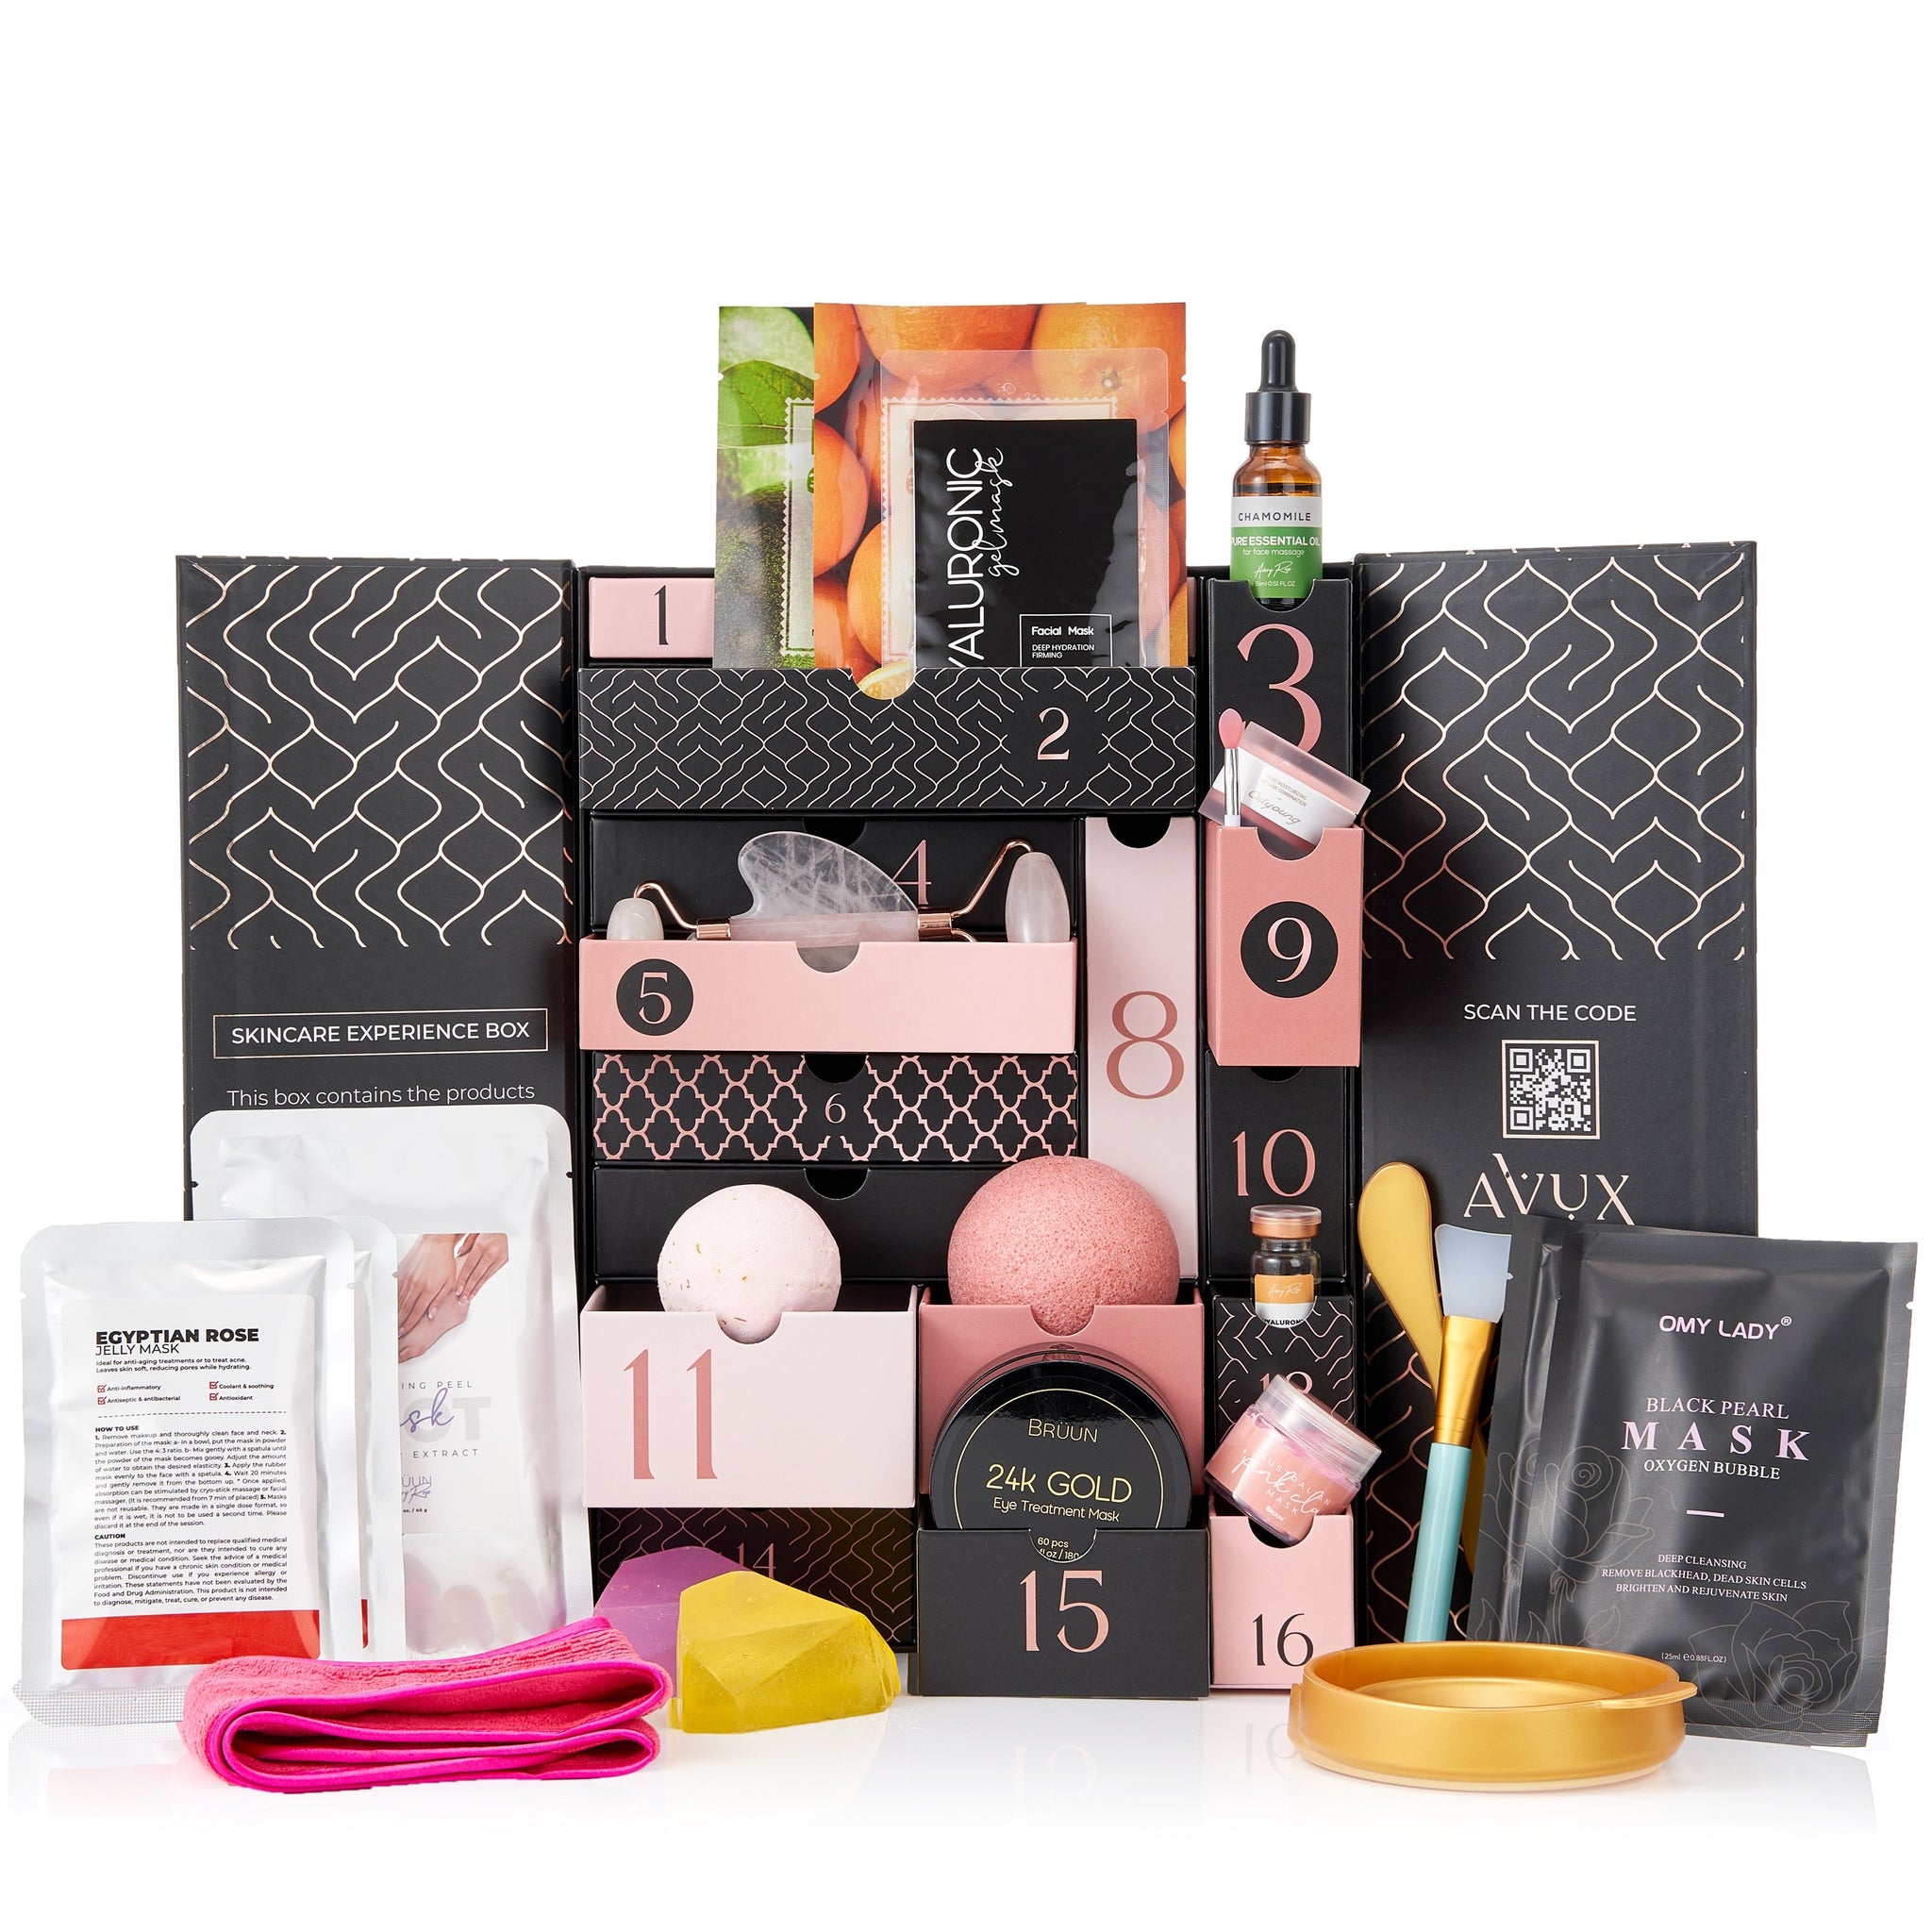 AVUX Beauty Care Gift Box 23 pcs – Bath and Body Set - Spa Set Gift for women